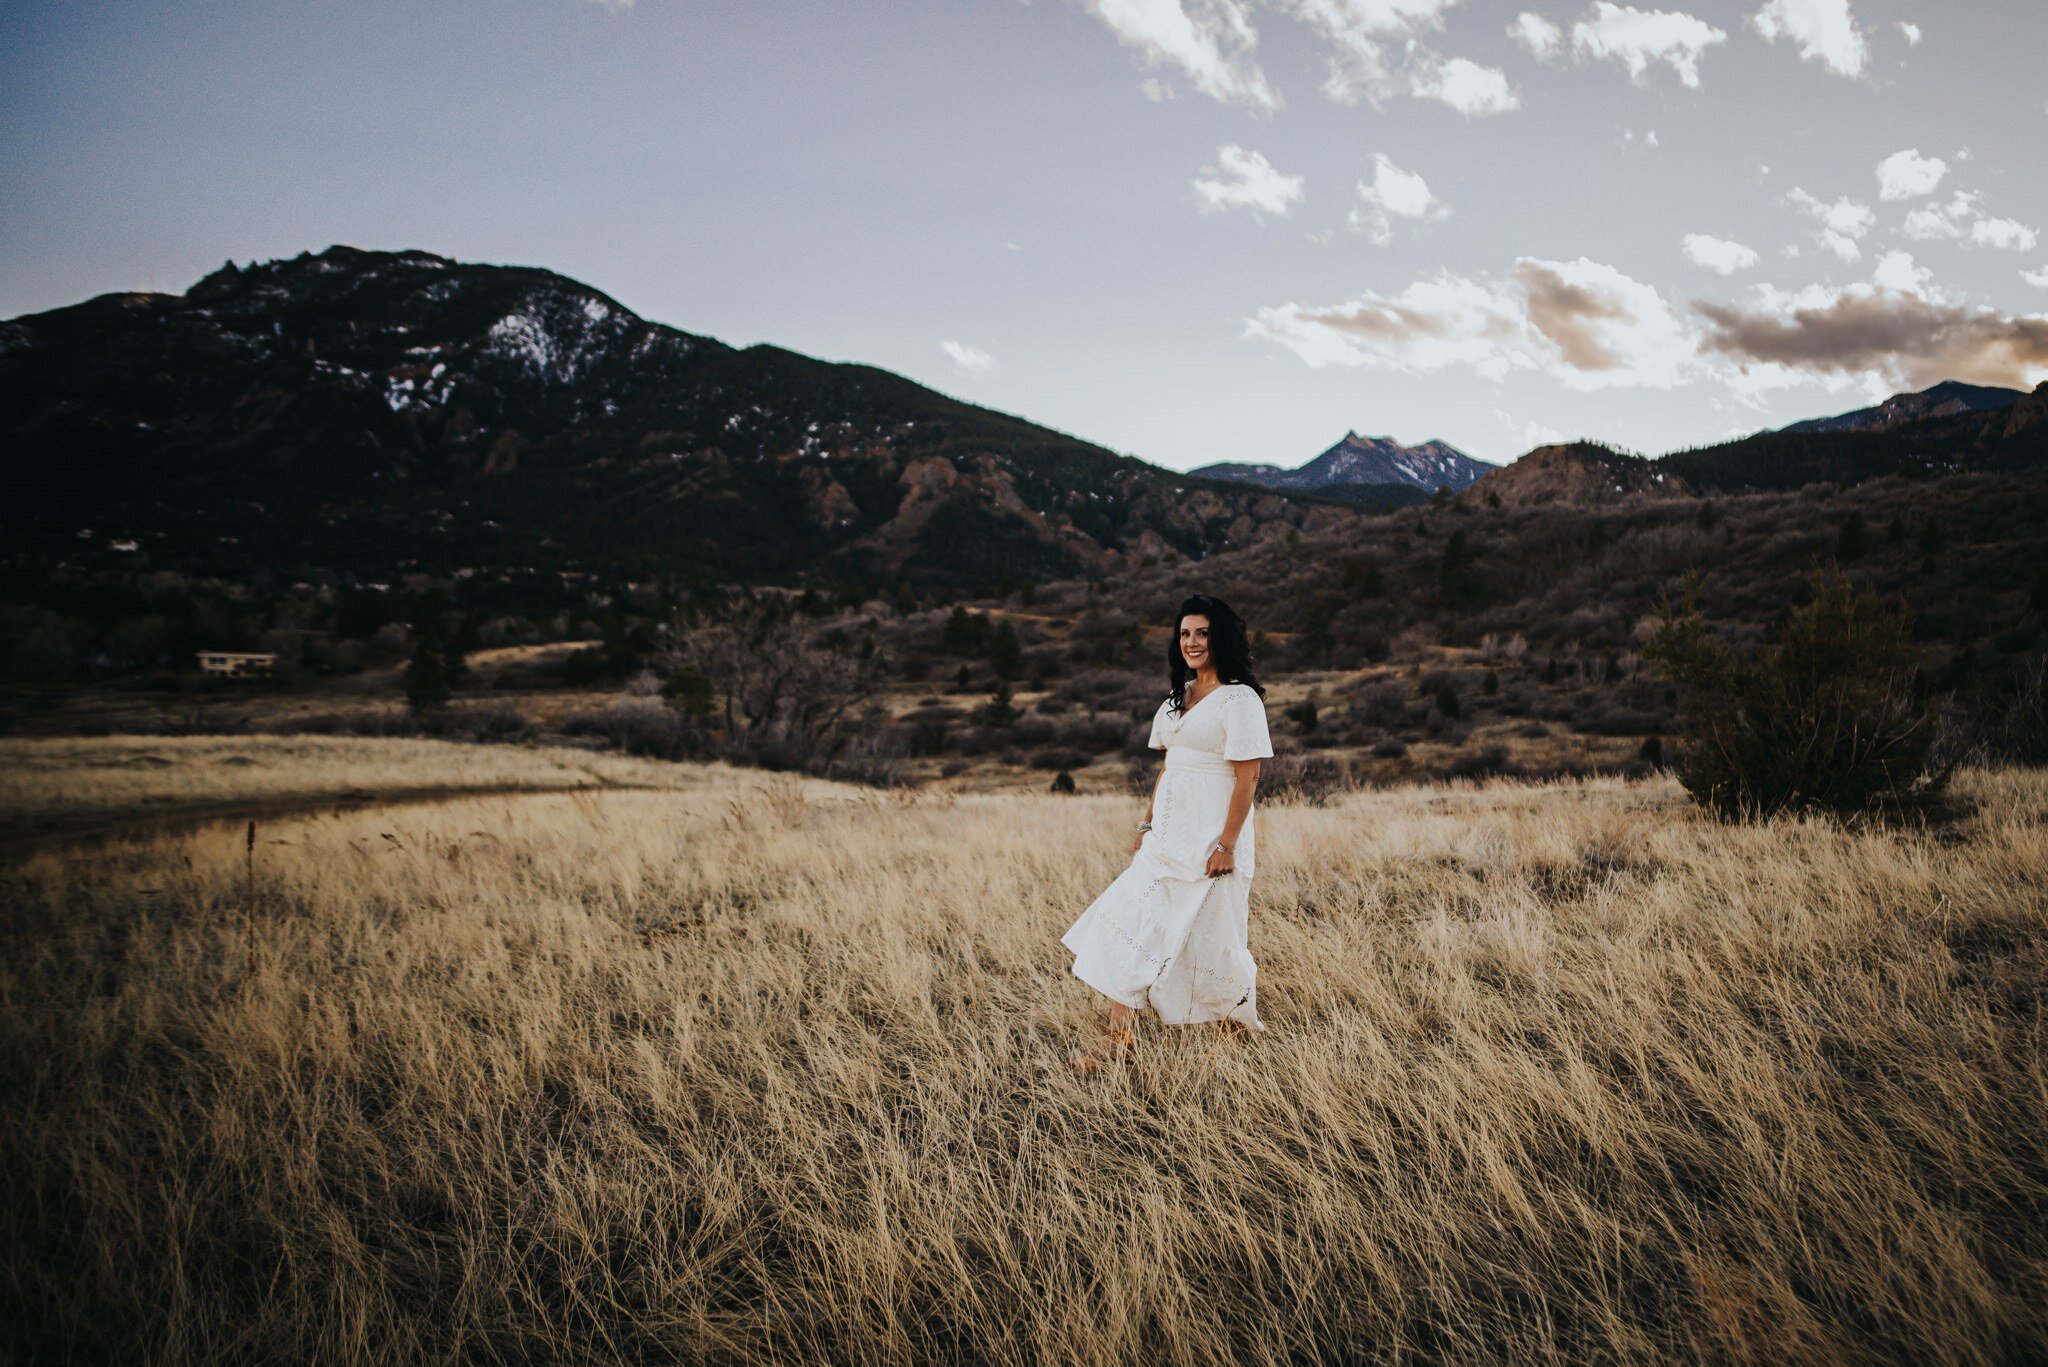 Celi+Turner+Headshots+Colorado+Springs+Colorado+Sunset+Mountains+Field+Woman+Wild+Prairie+Photography-31-2020.jpeg